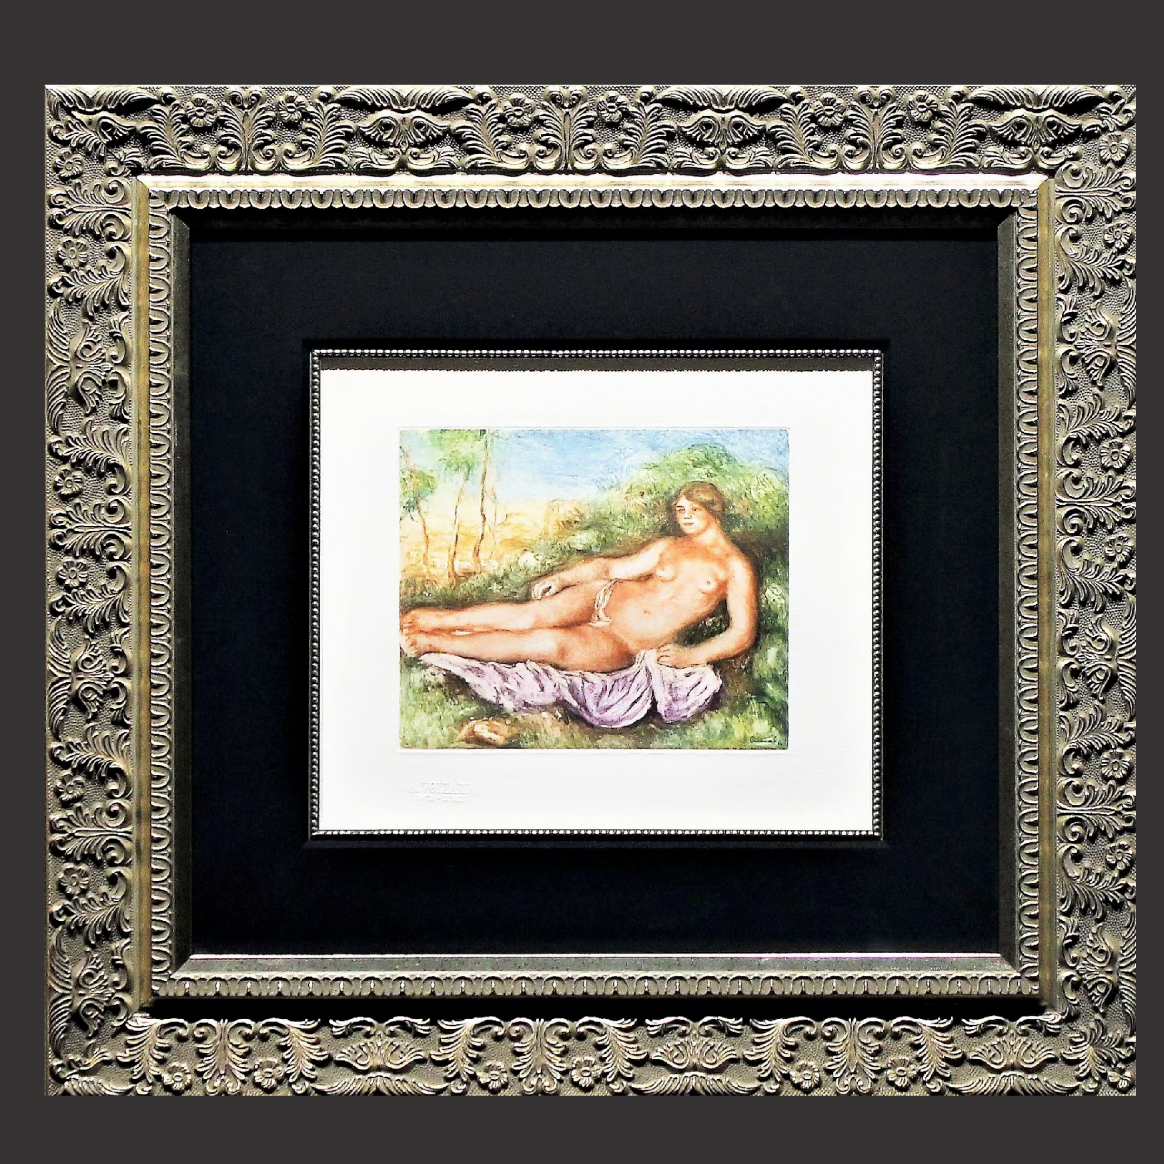 Pierre-Auguste Renoir 'Femme nue couchee' 1919